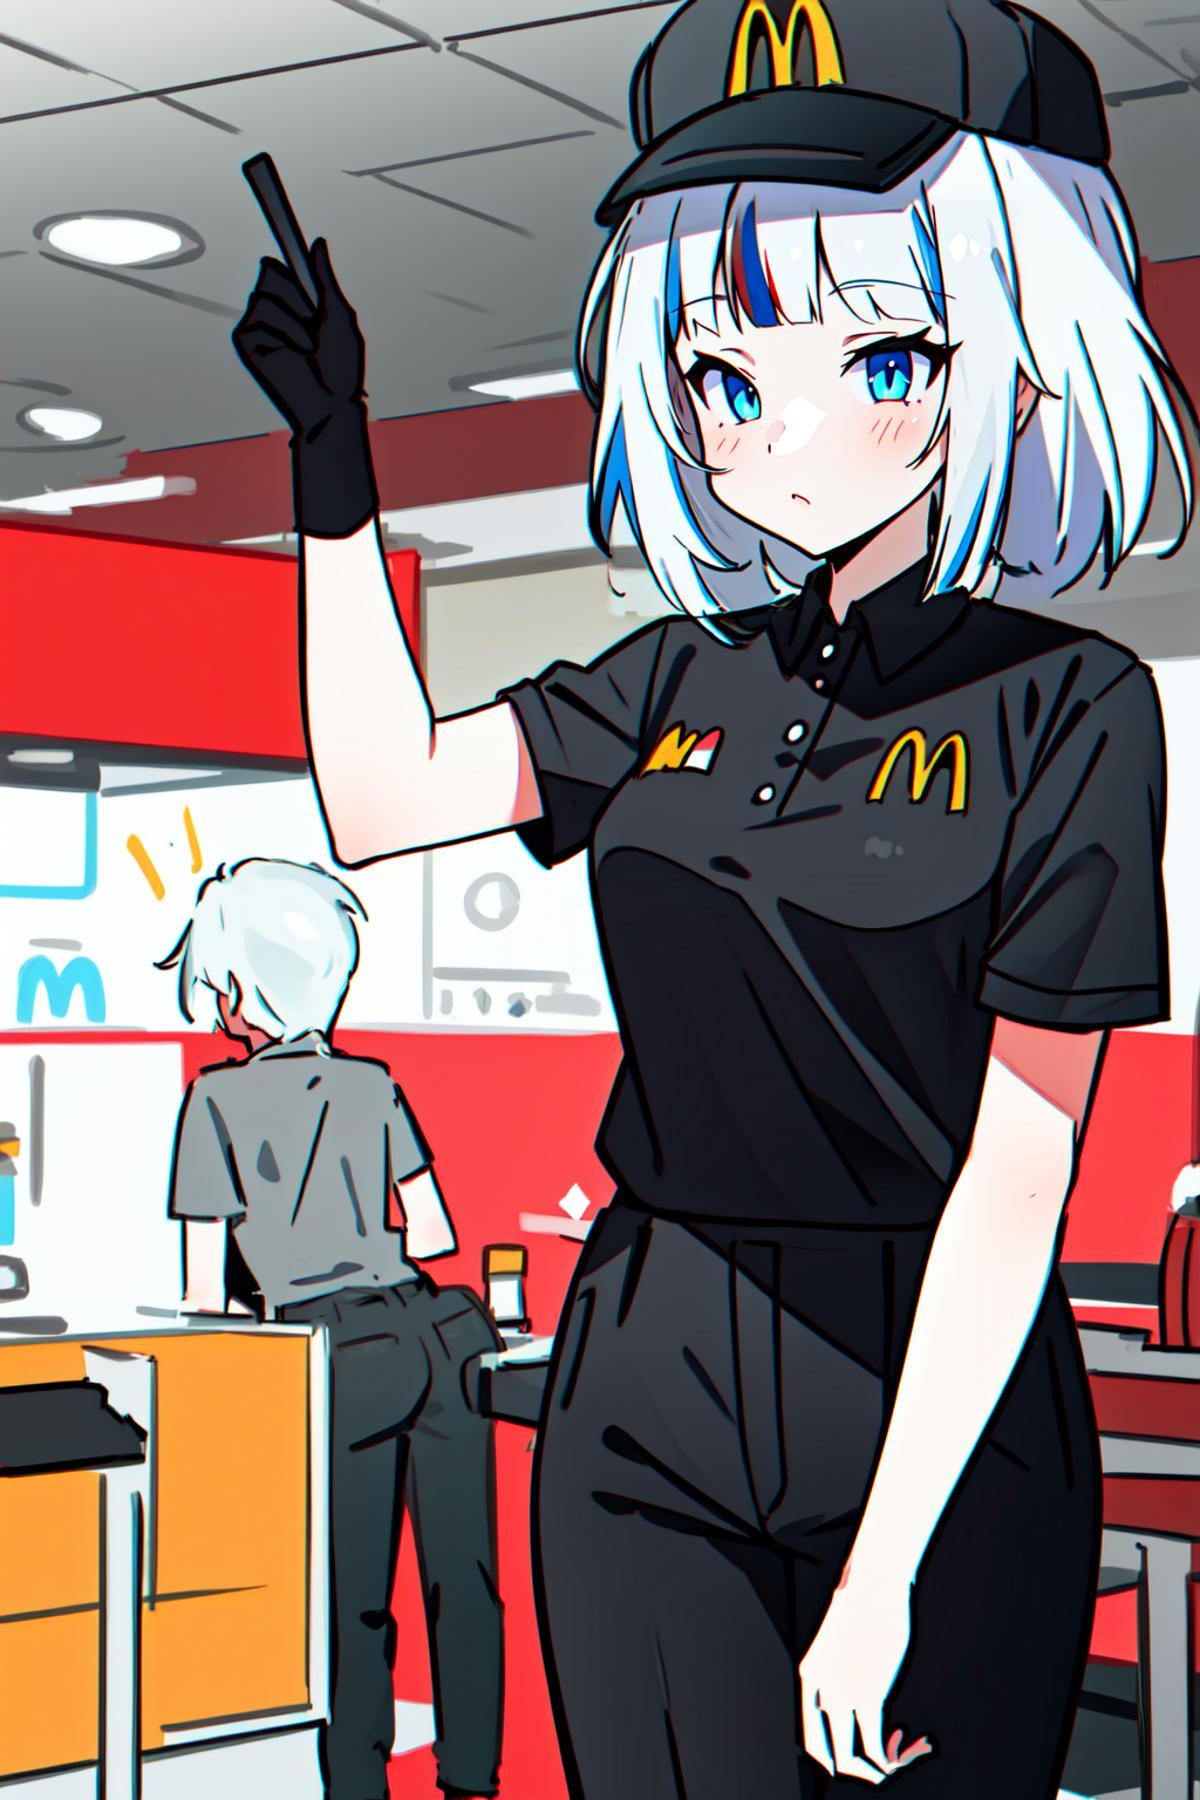 McDonalds Uniform (black) | Outfit LoRA image by PettankoPaizuri